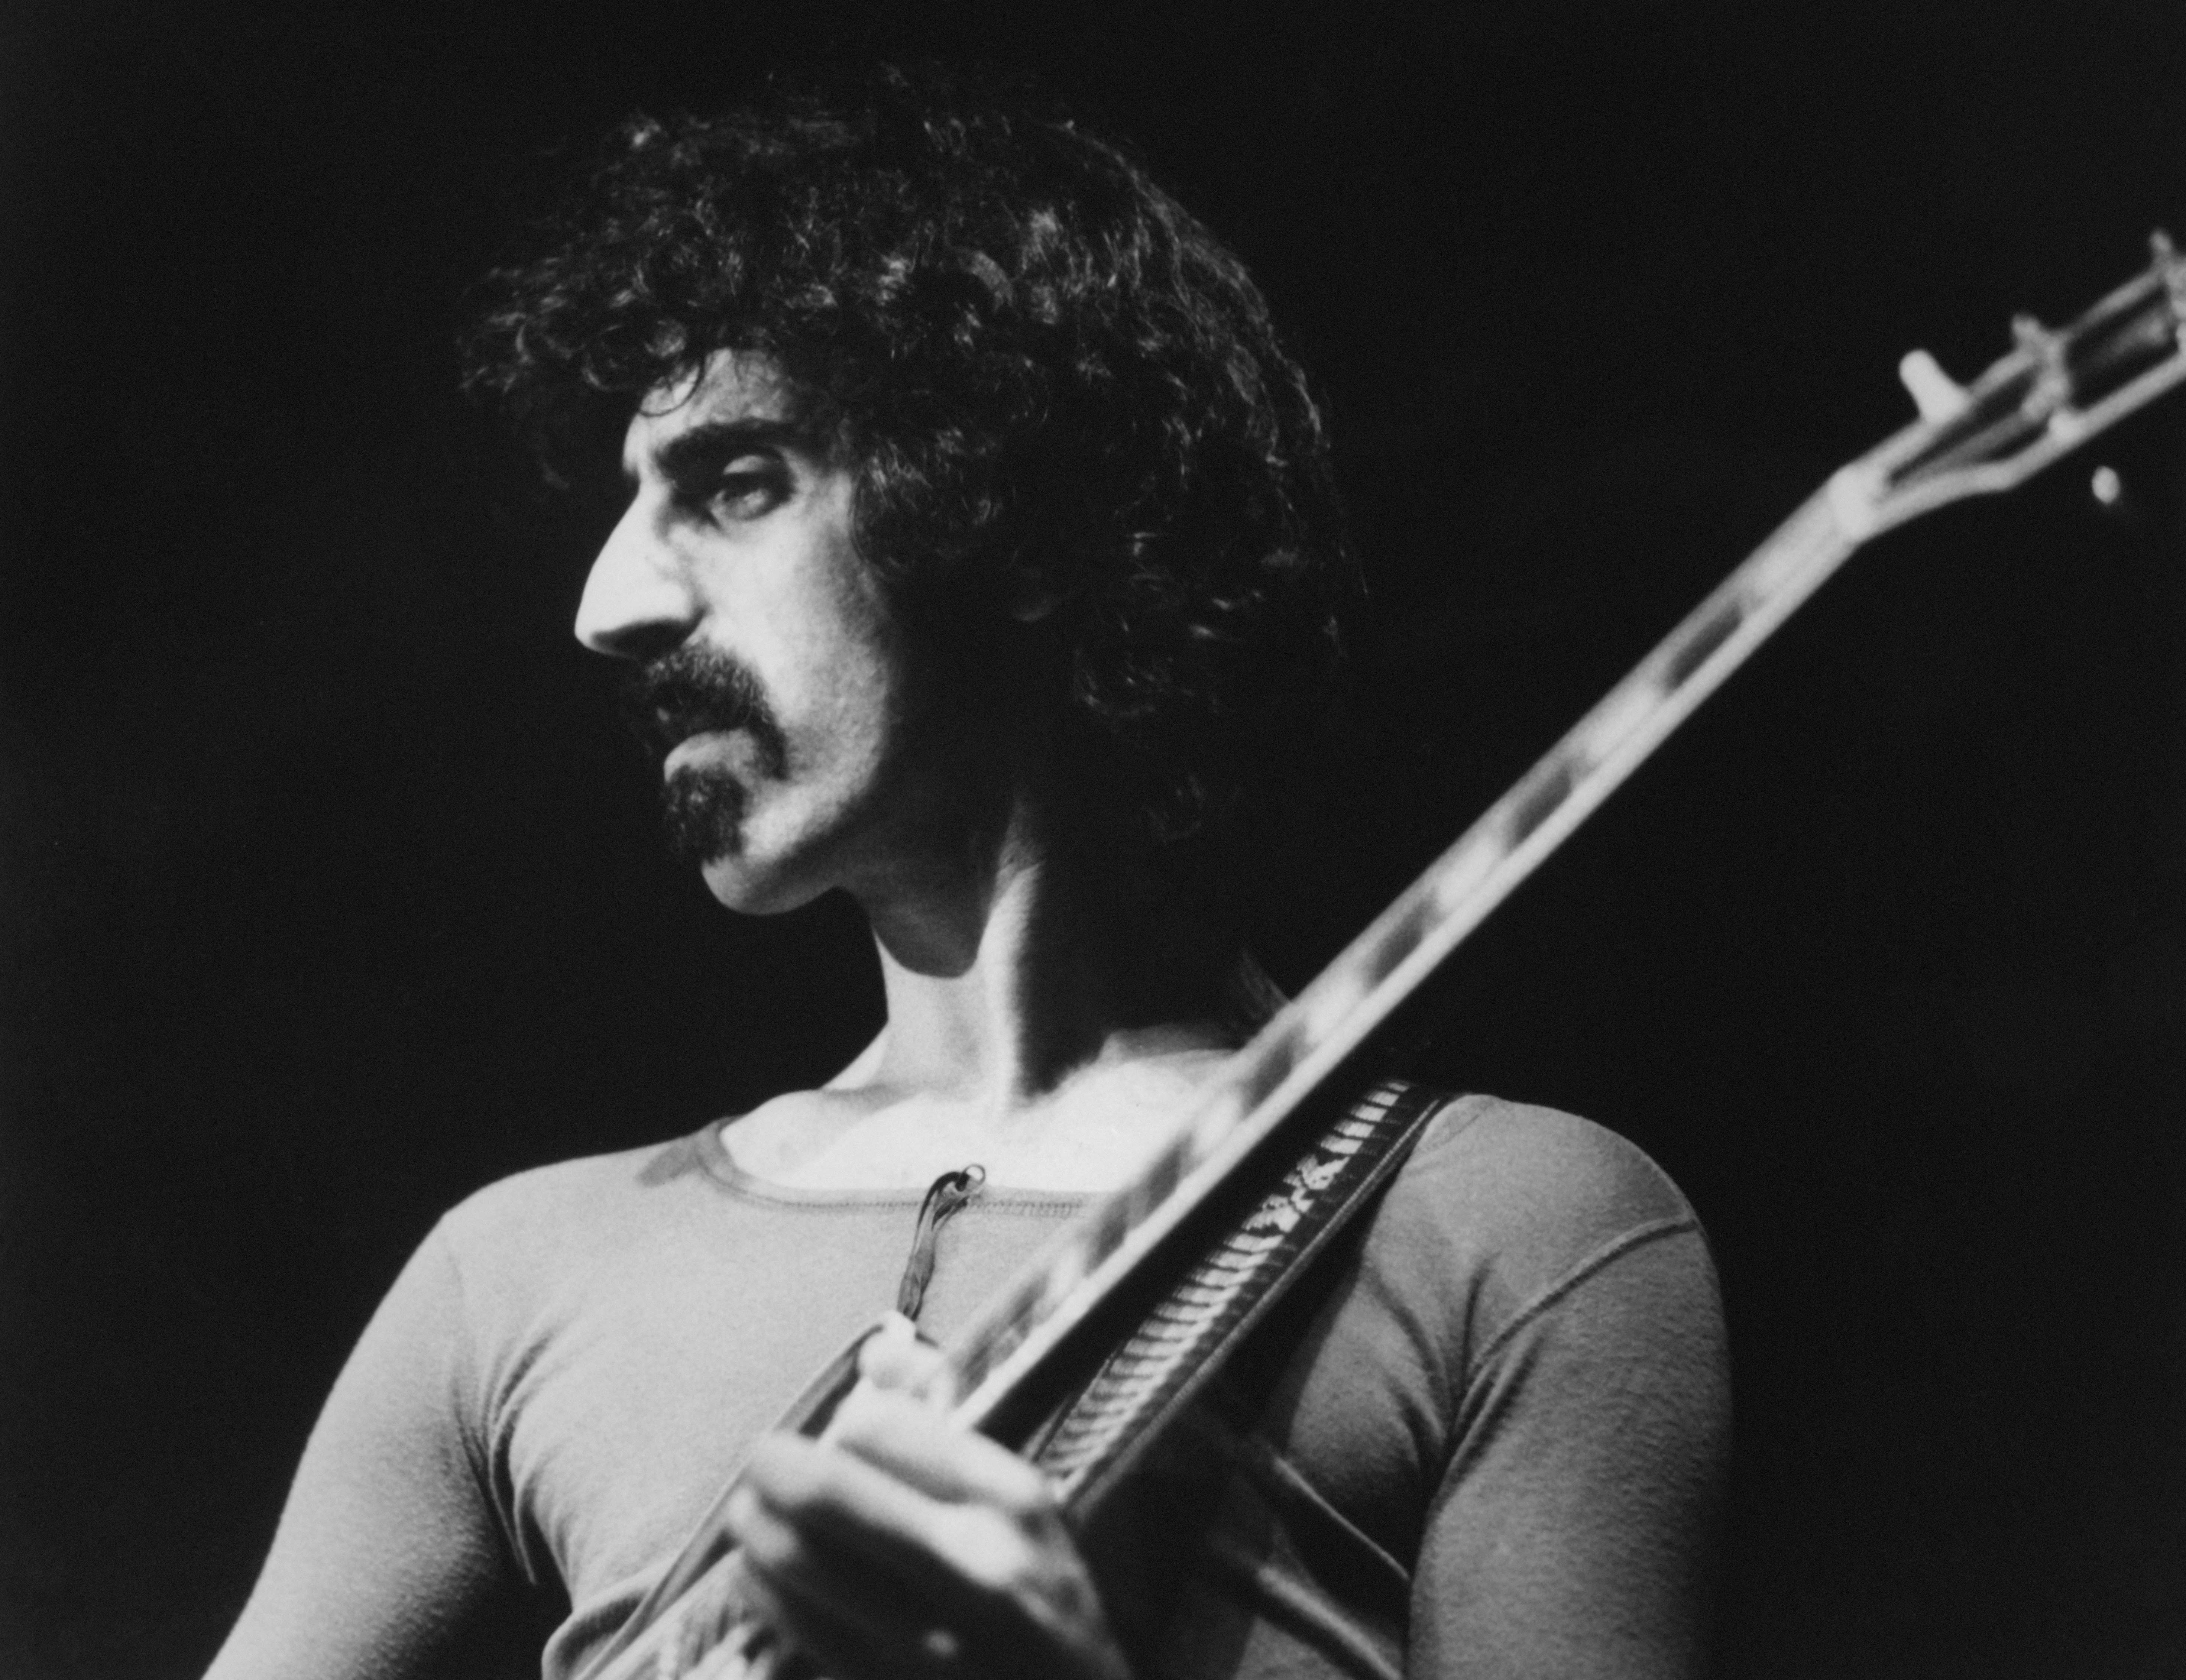 Frank Zappa playing guitar